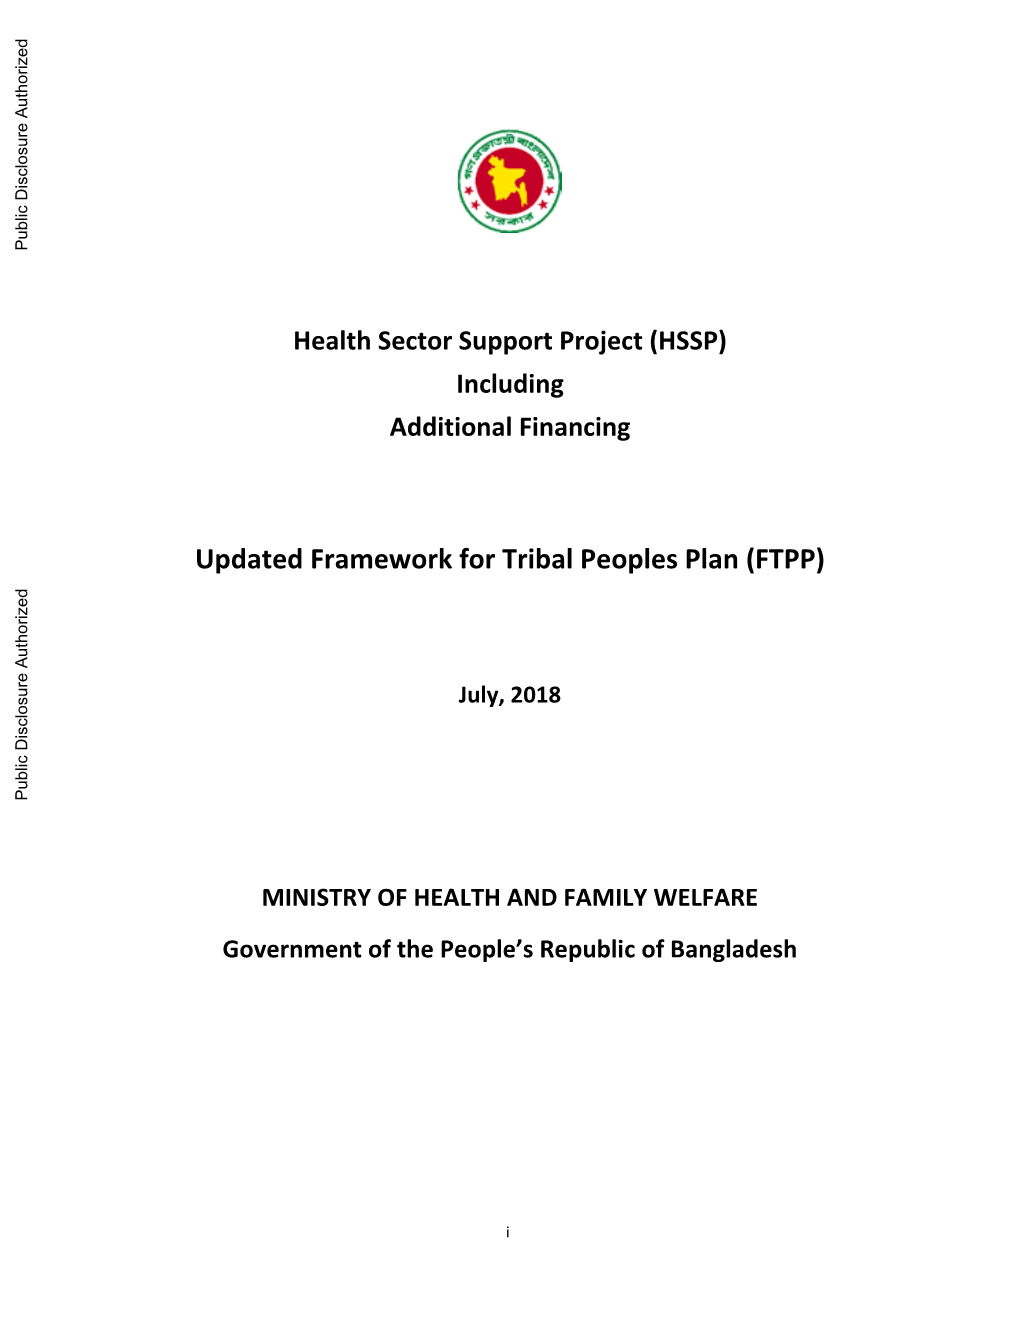 Tribal Peoples Plan (FTPP)